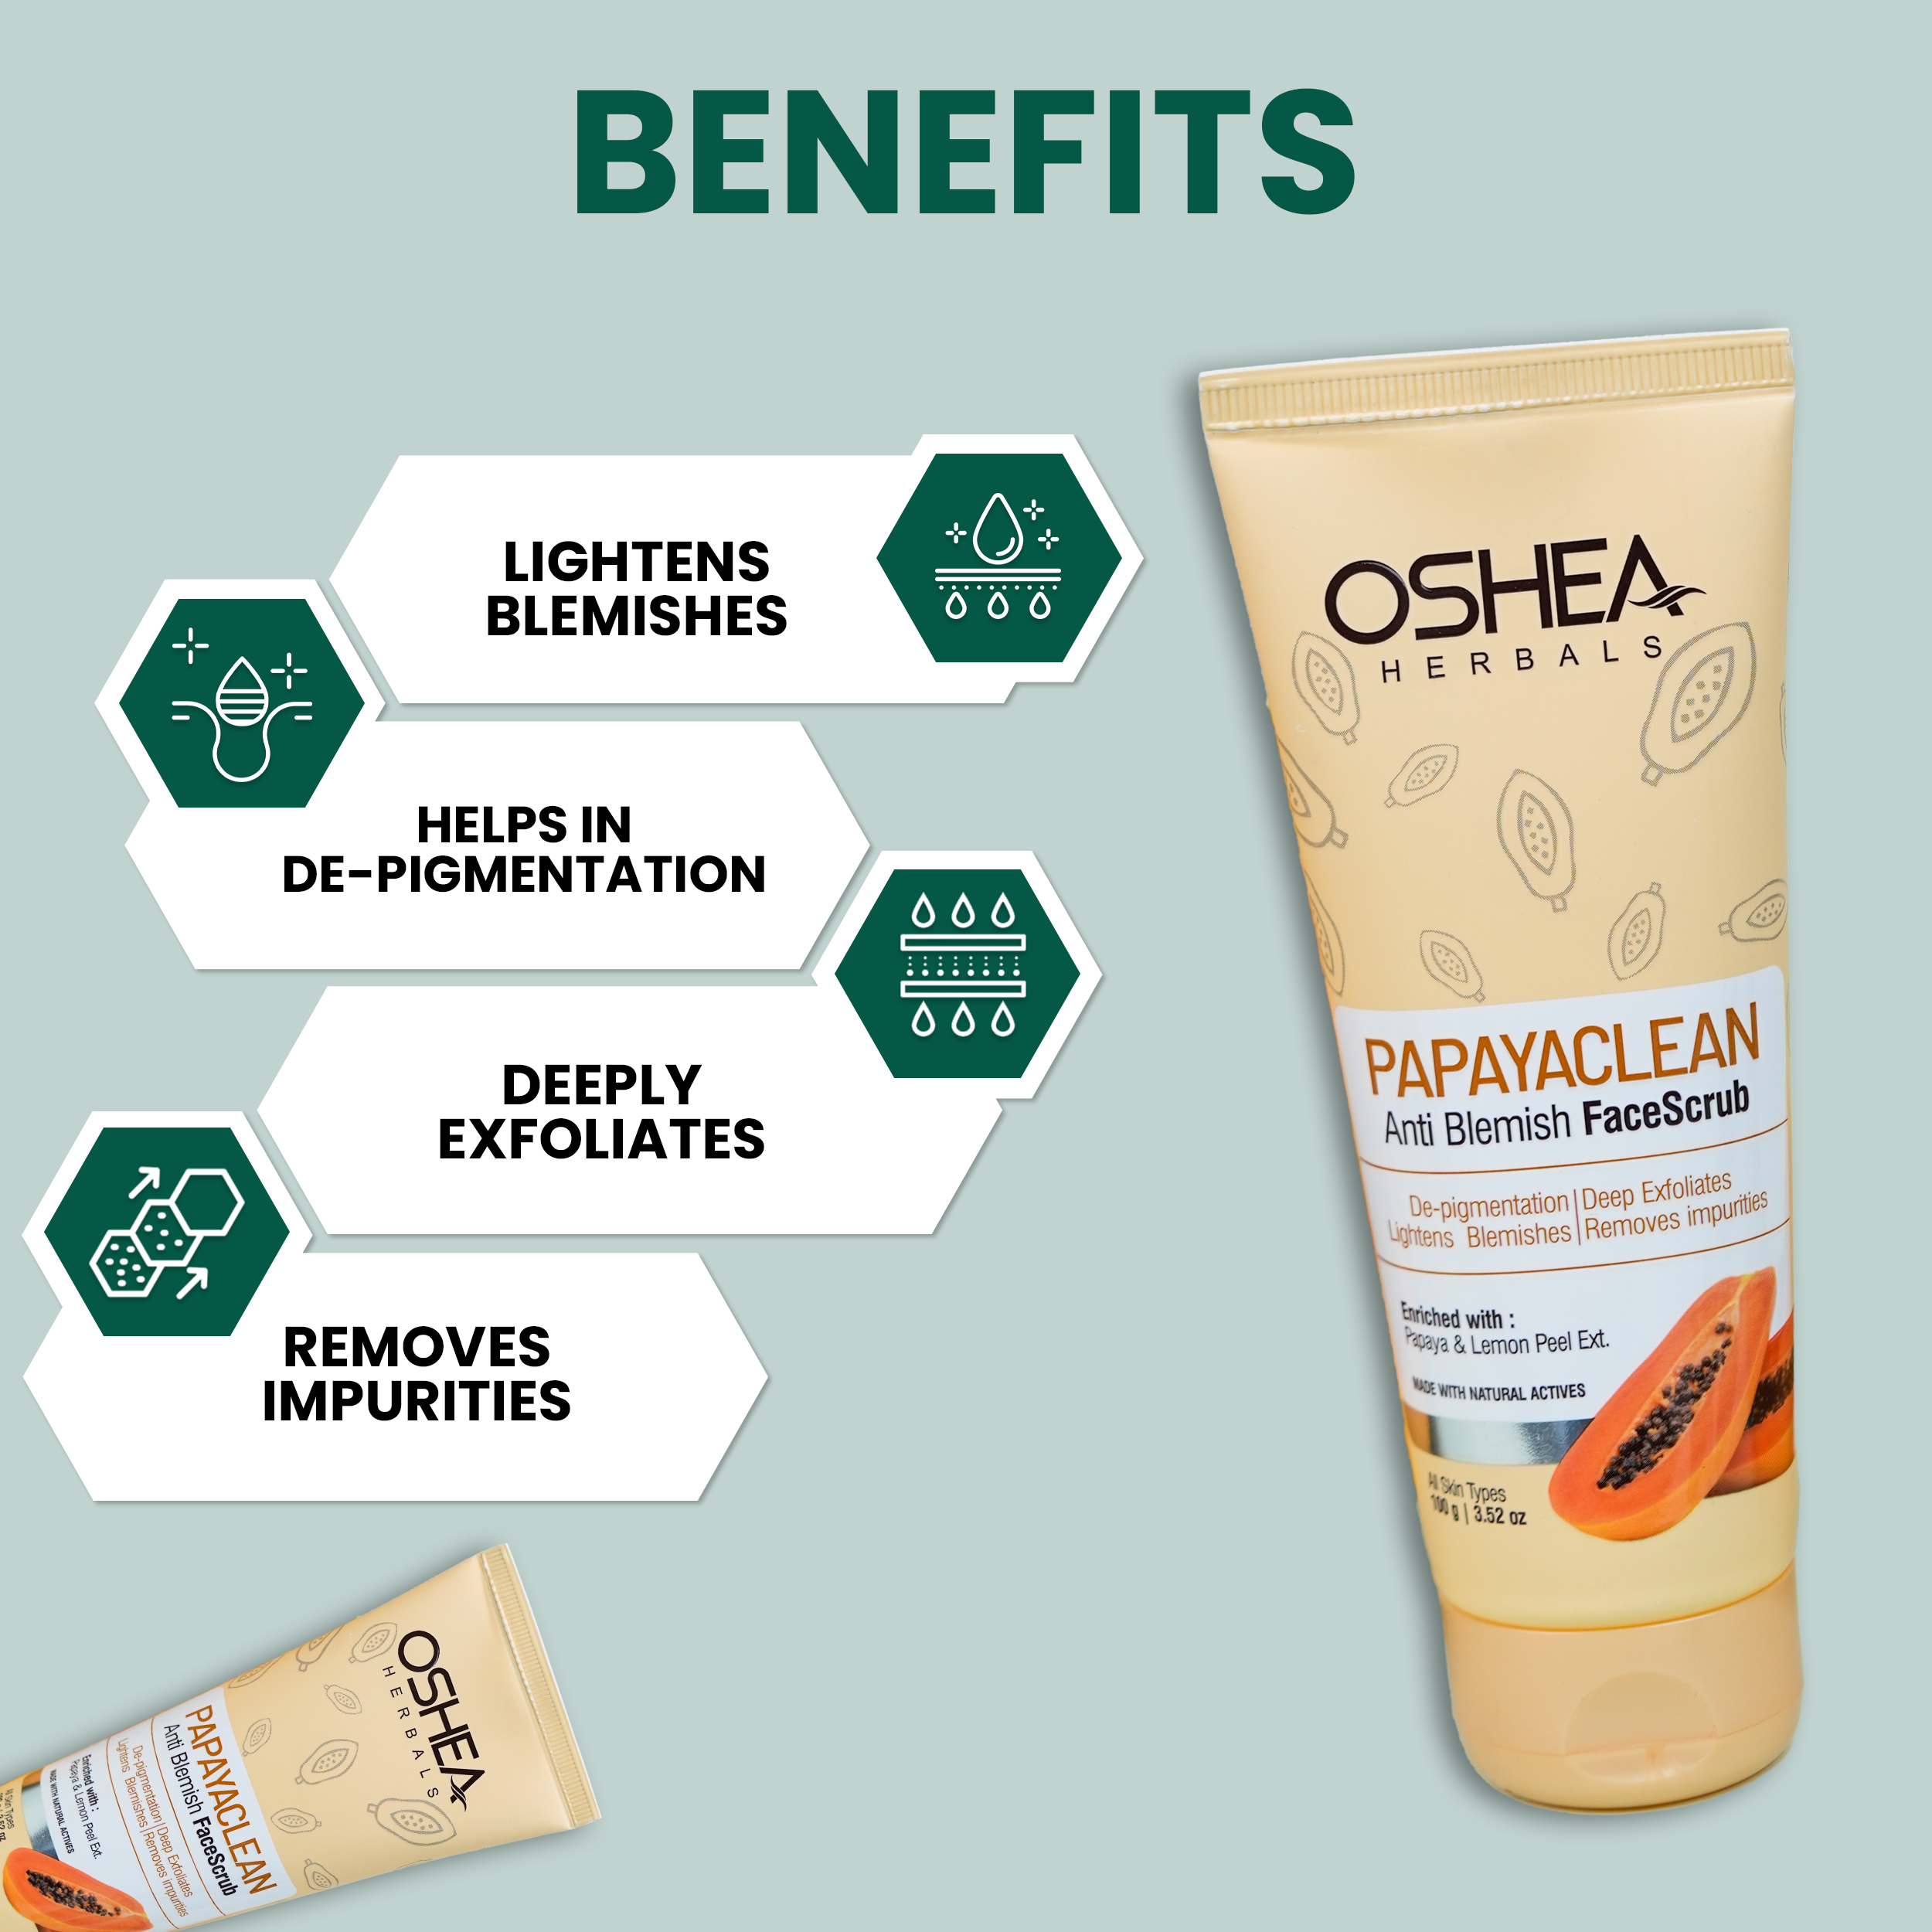 Benefits Papayaclean Anti Blemishes Face Scrub Oshea Herbals